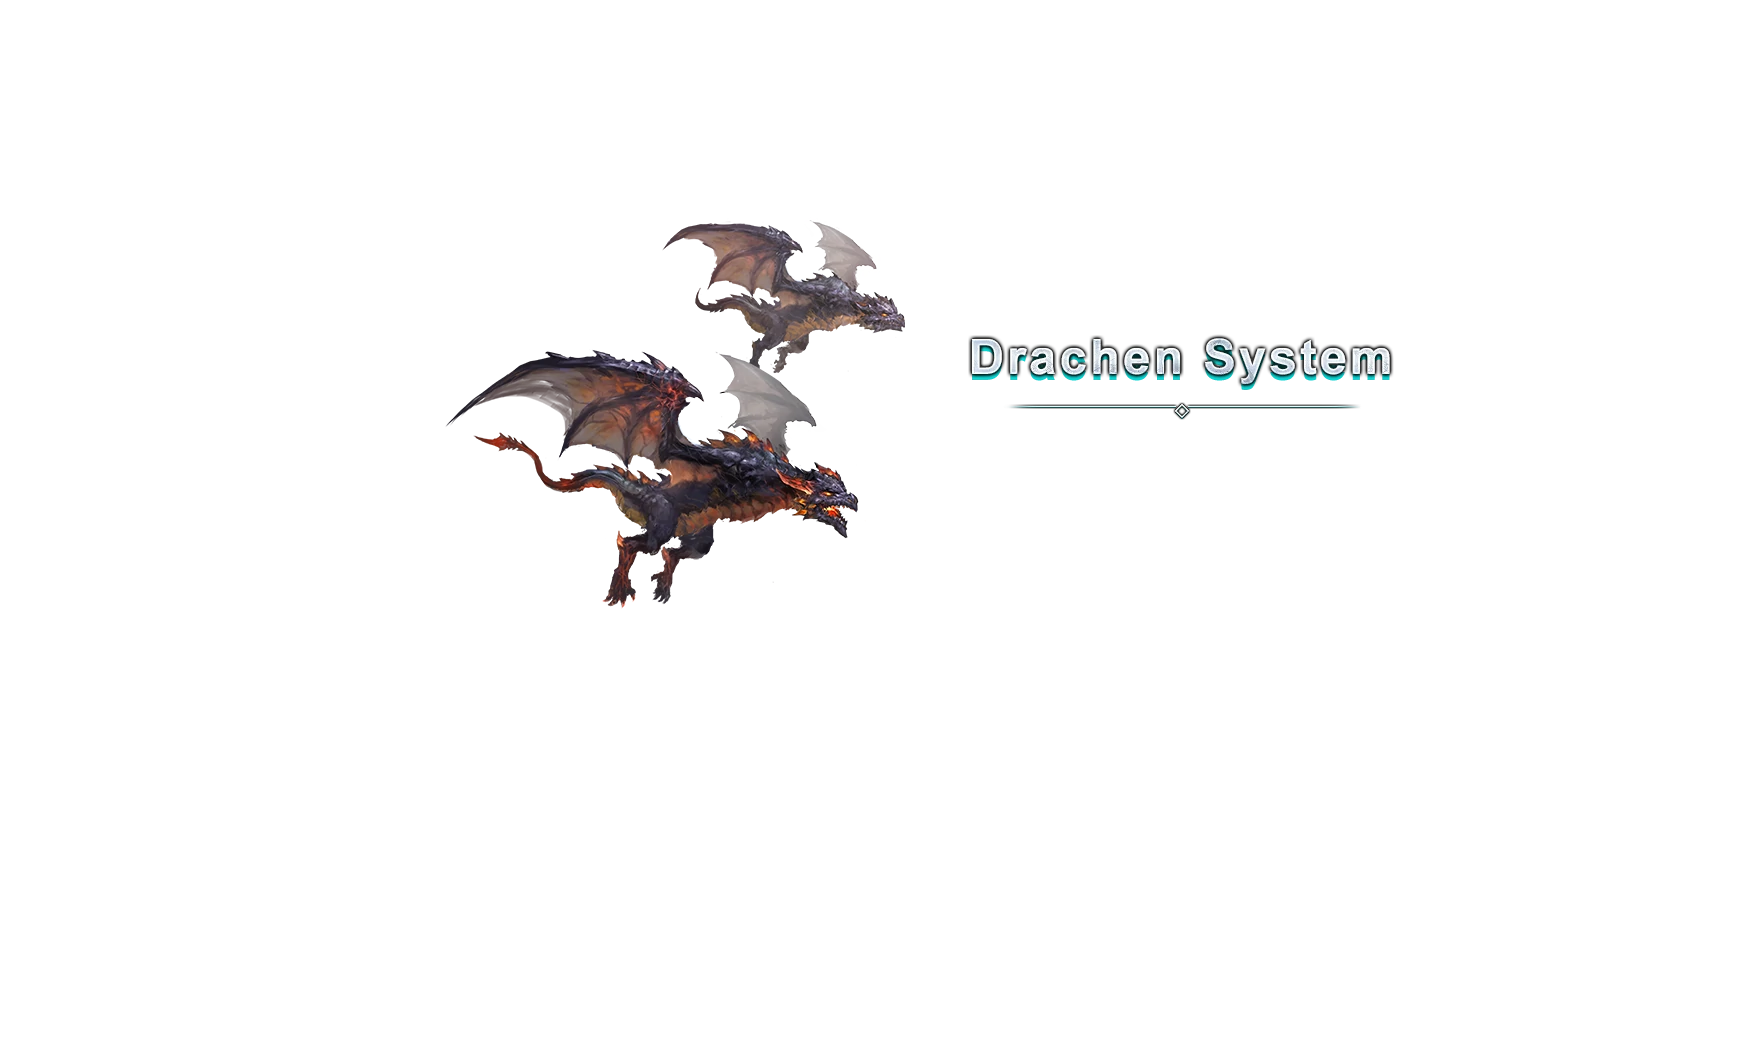 Drachen System